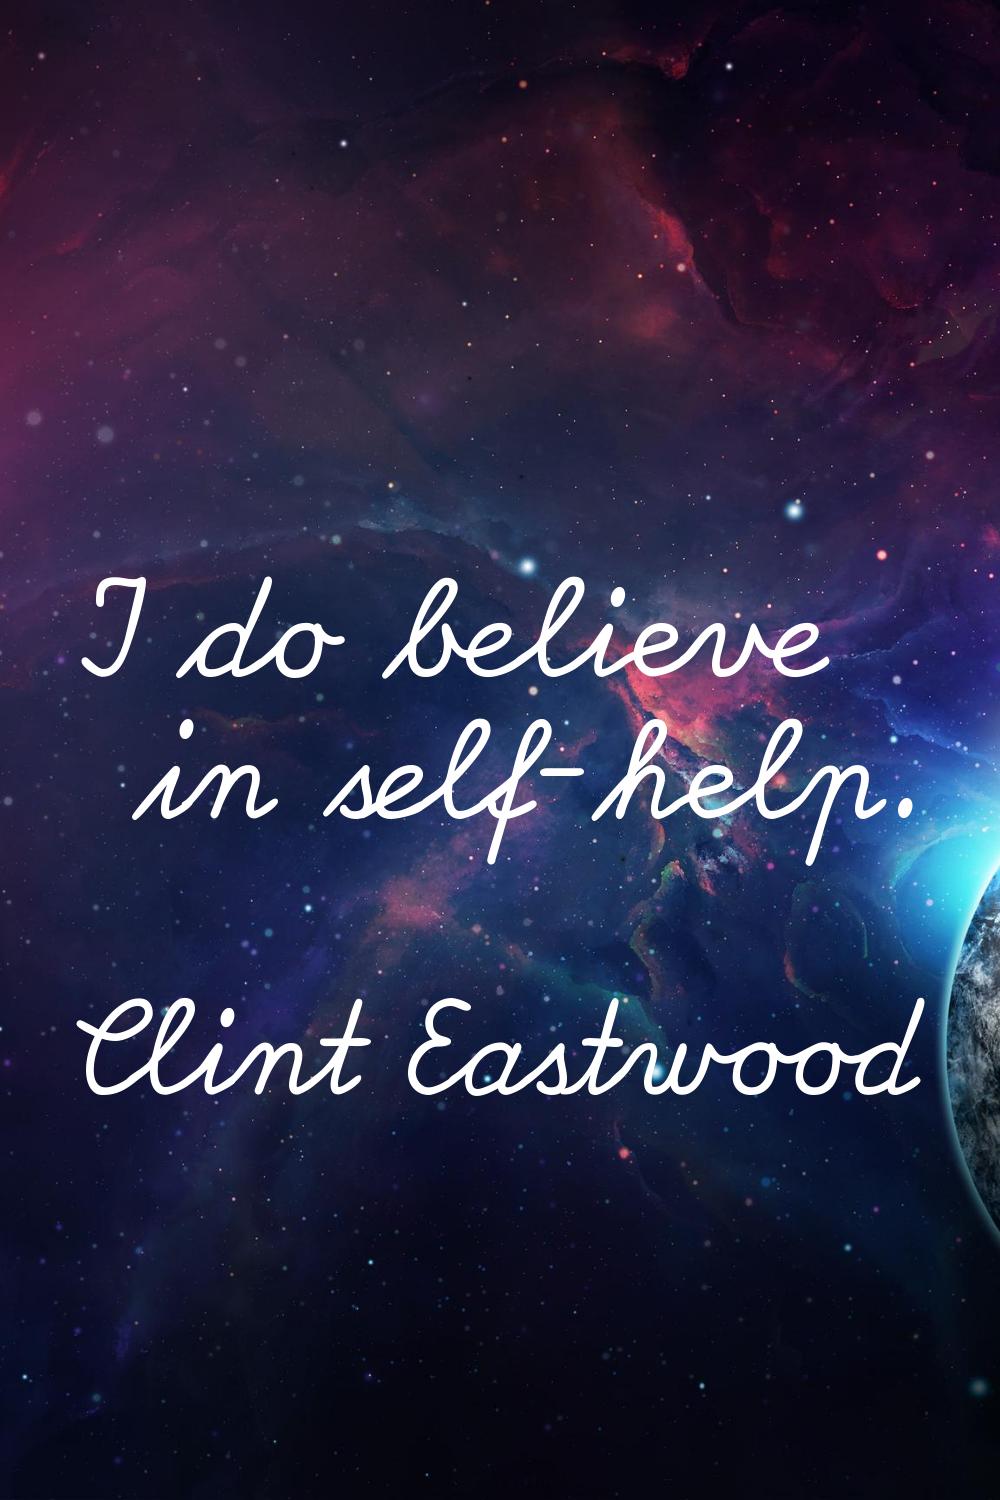 I do believe in self-help.